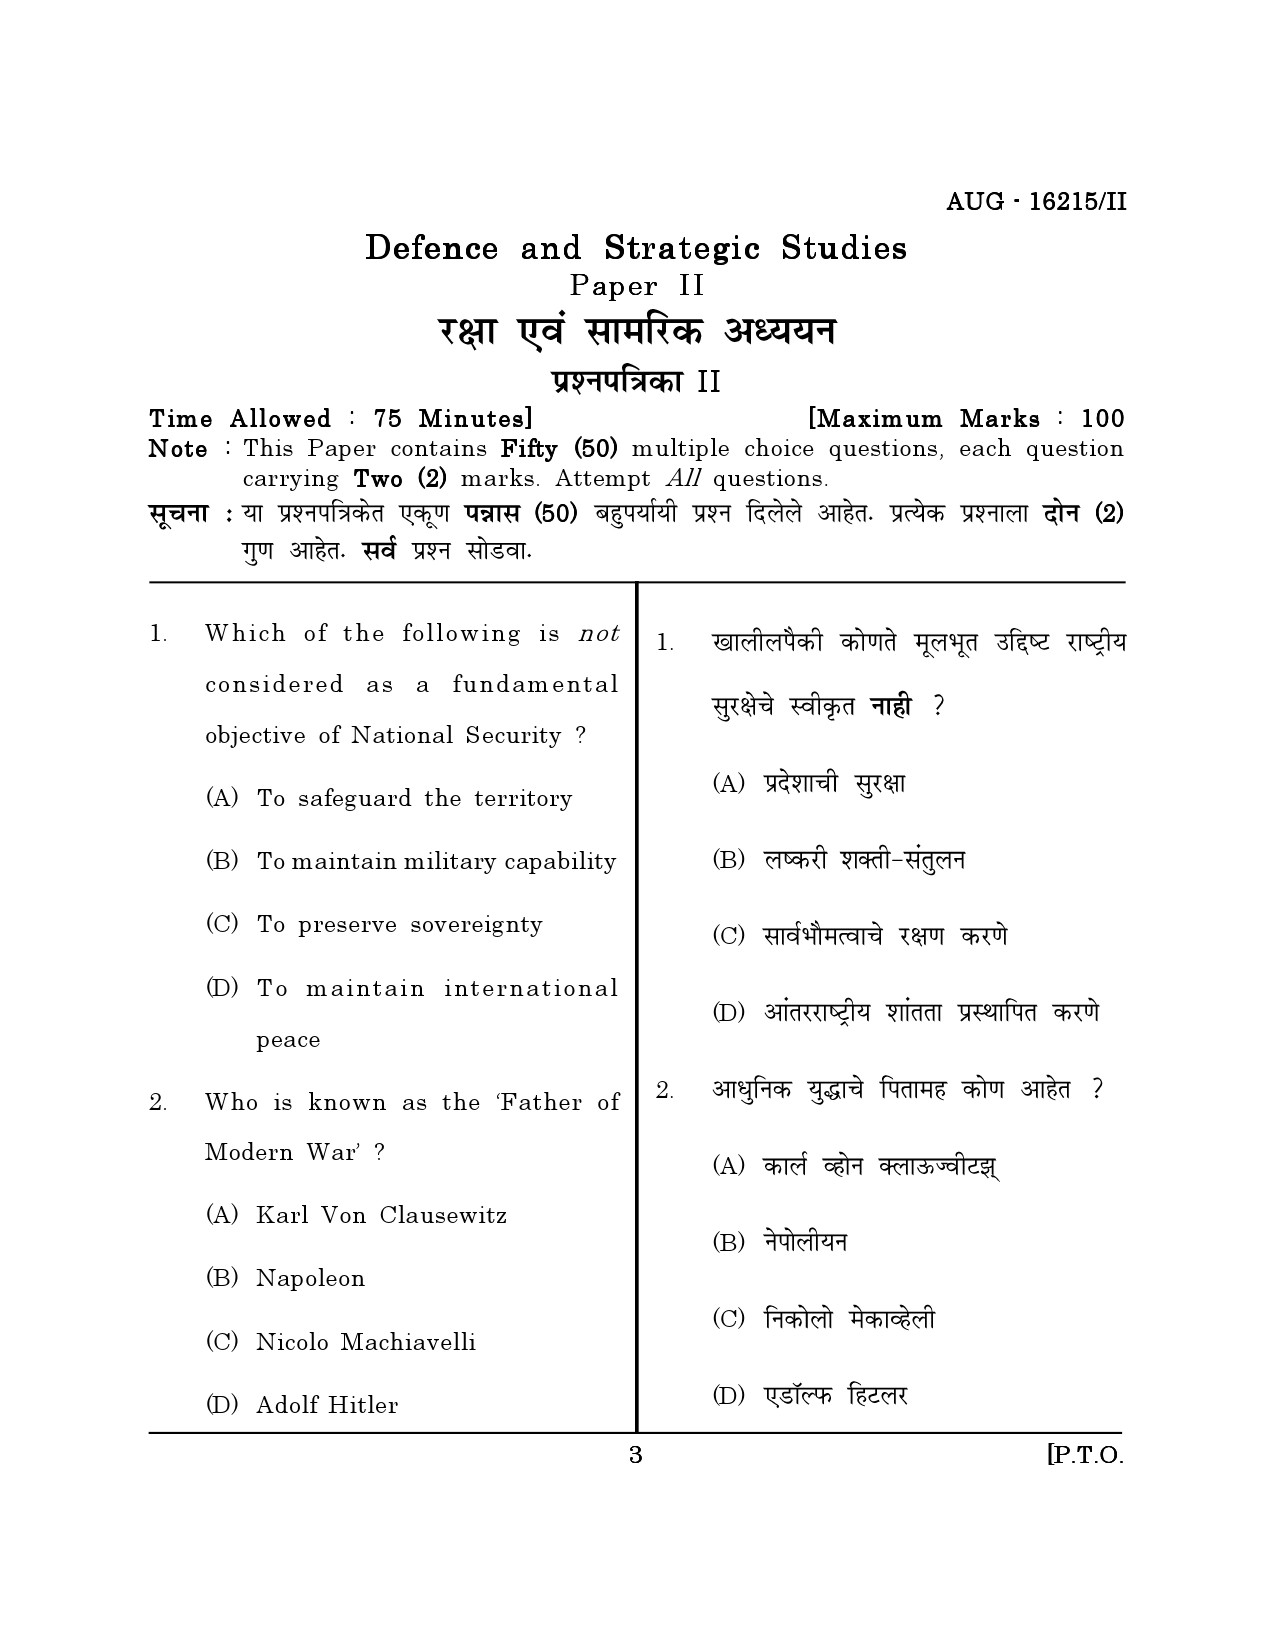 Maharashtra SET Defence and Strategic Studies Question Paper II August 2015 2